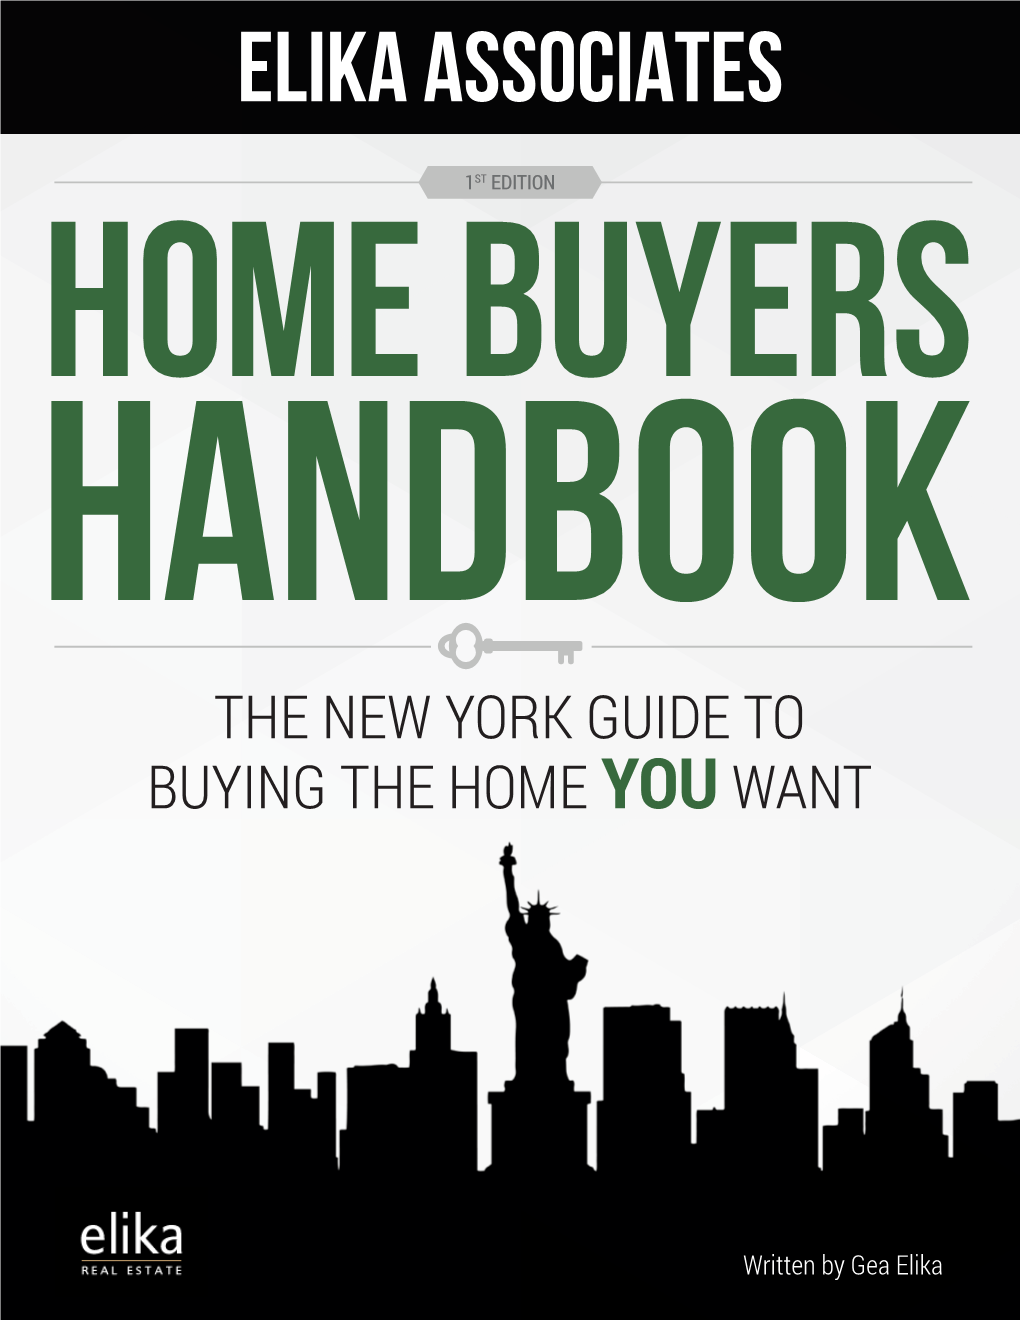 Elika Associate Home Buyers Handbook